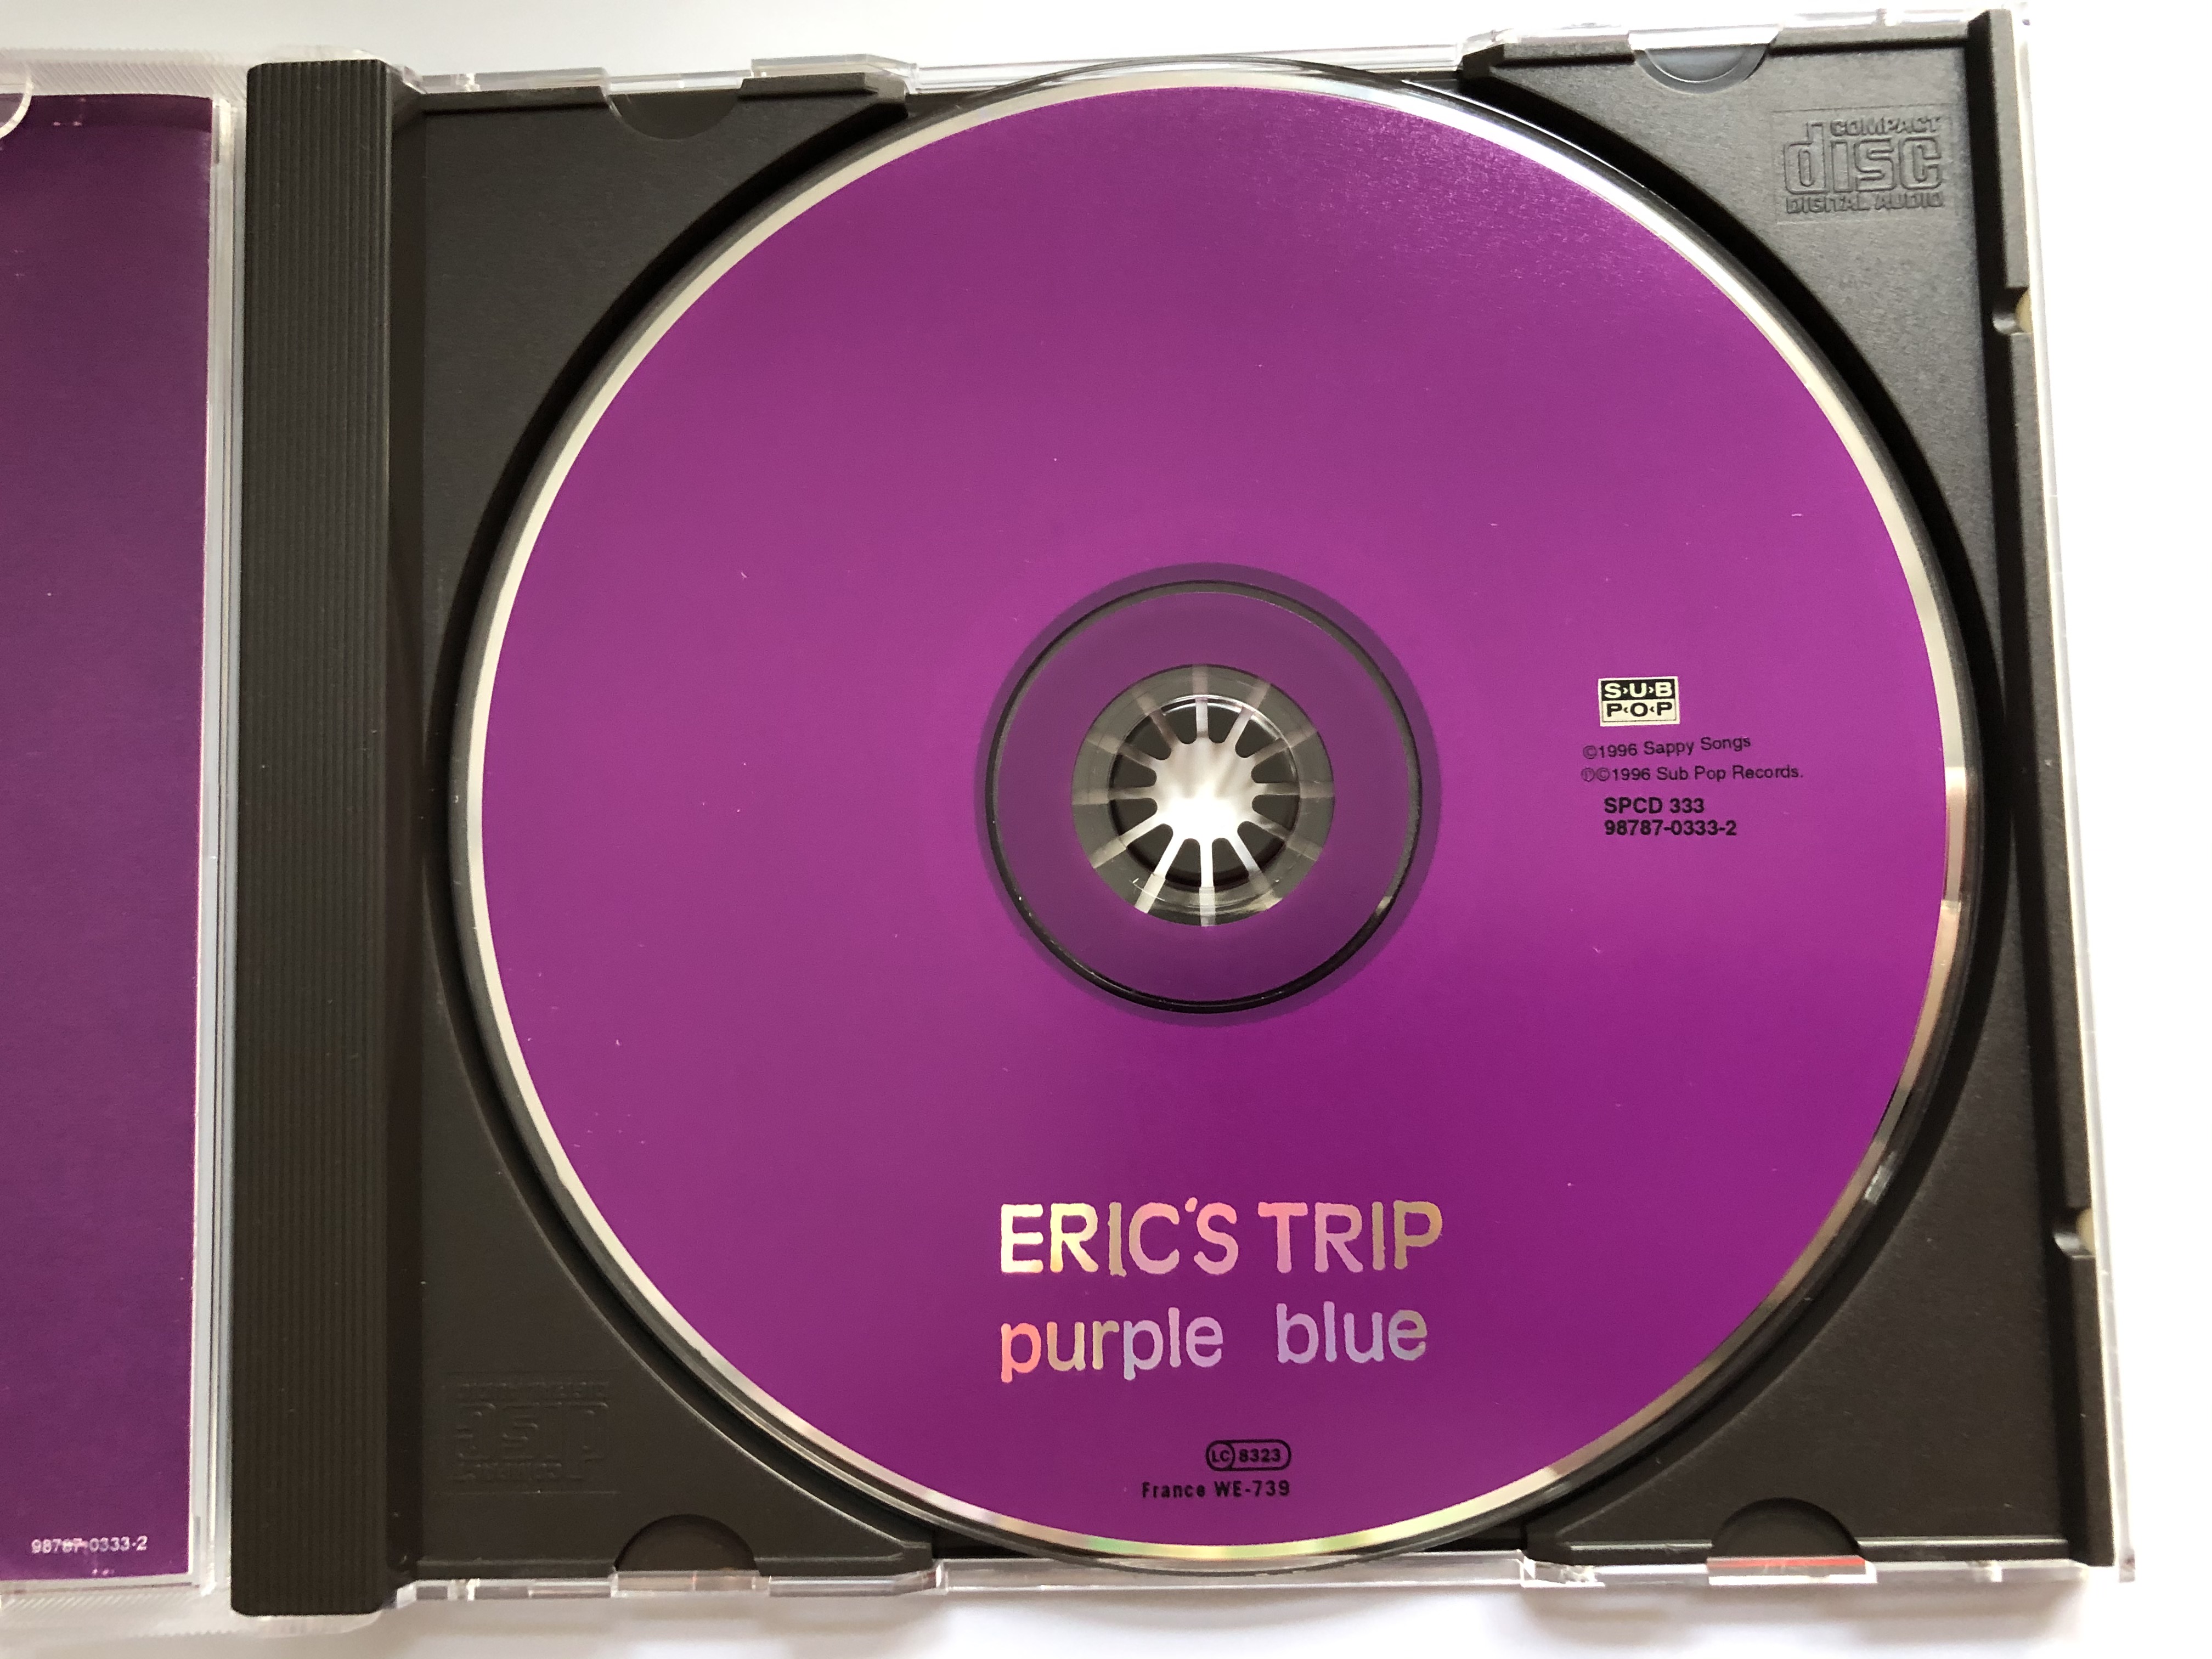 eric-s-trip-purple-blue-sub-pop-audio-cd-1996-spcd-333-2-.jpg